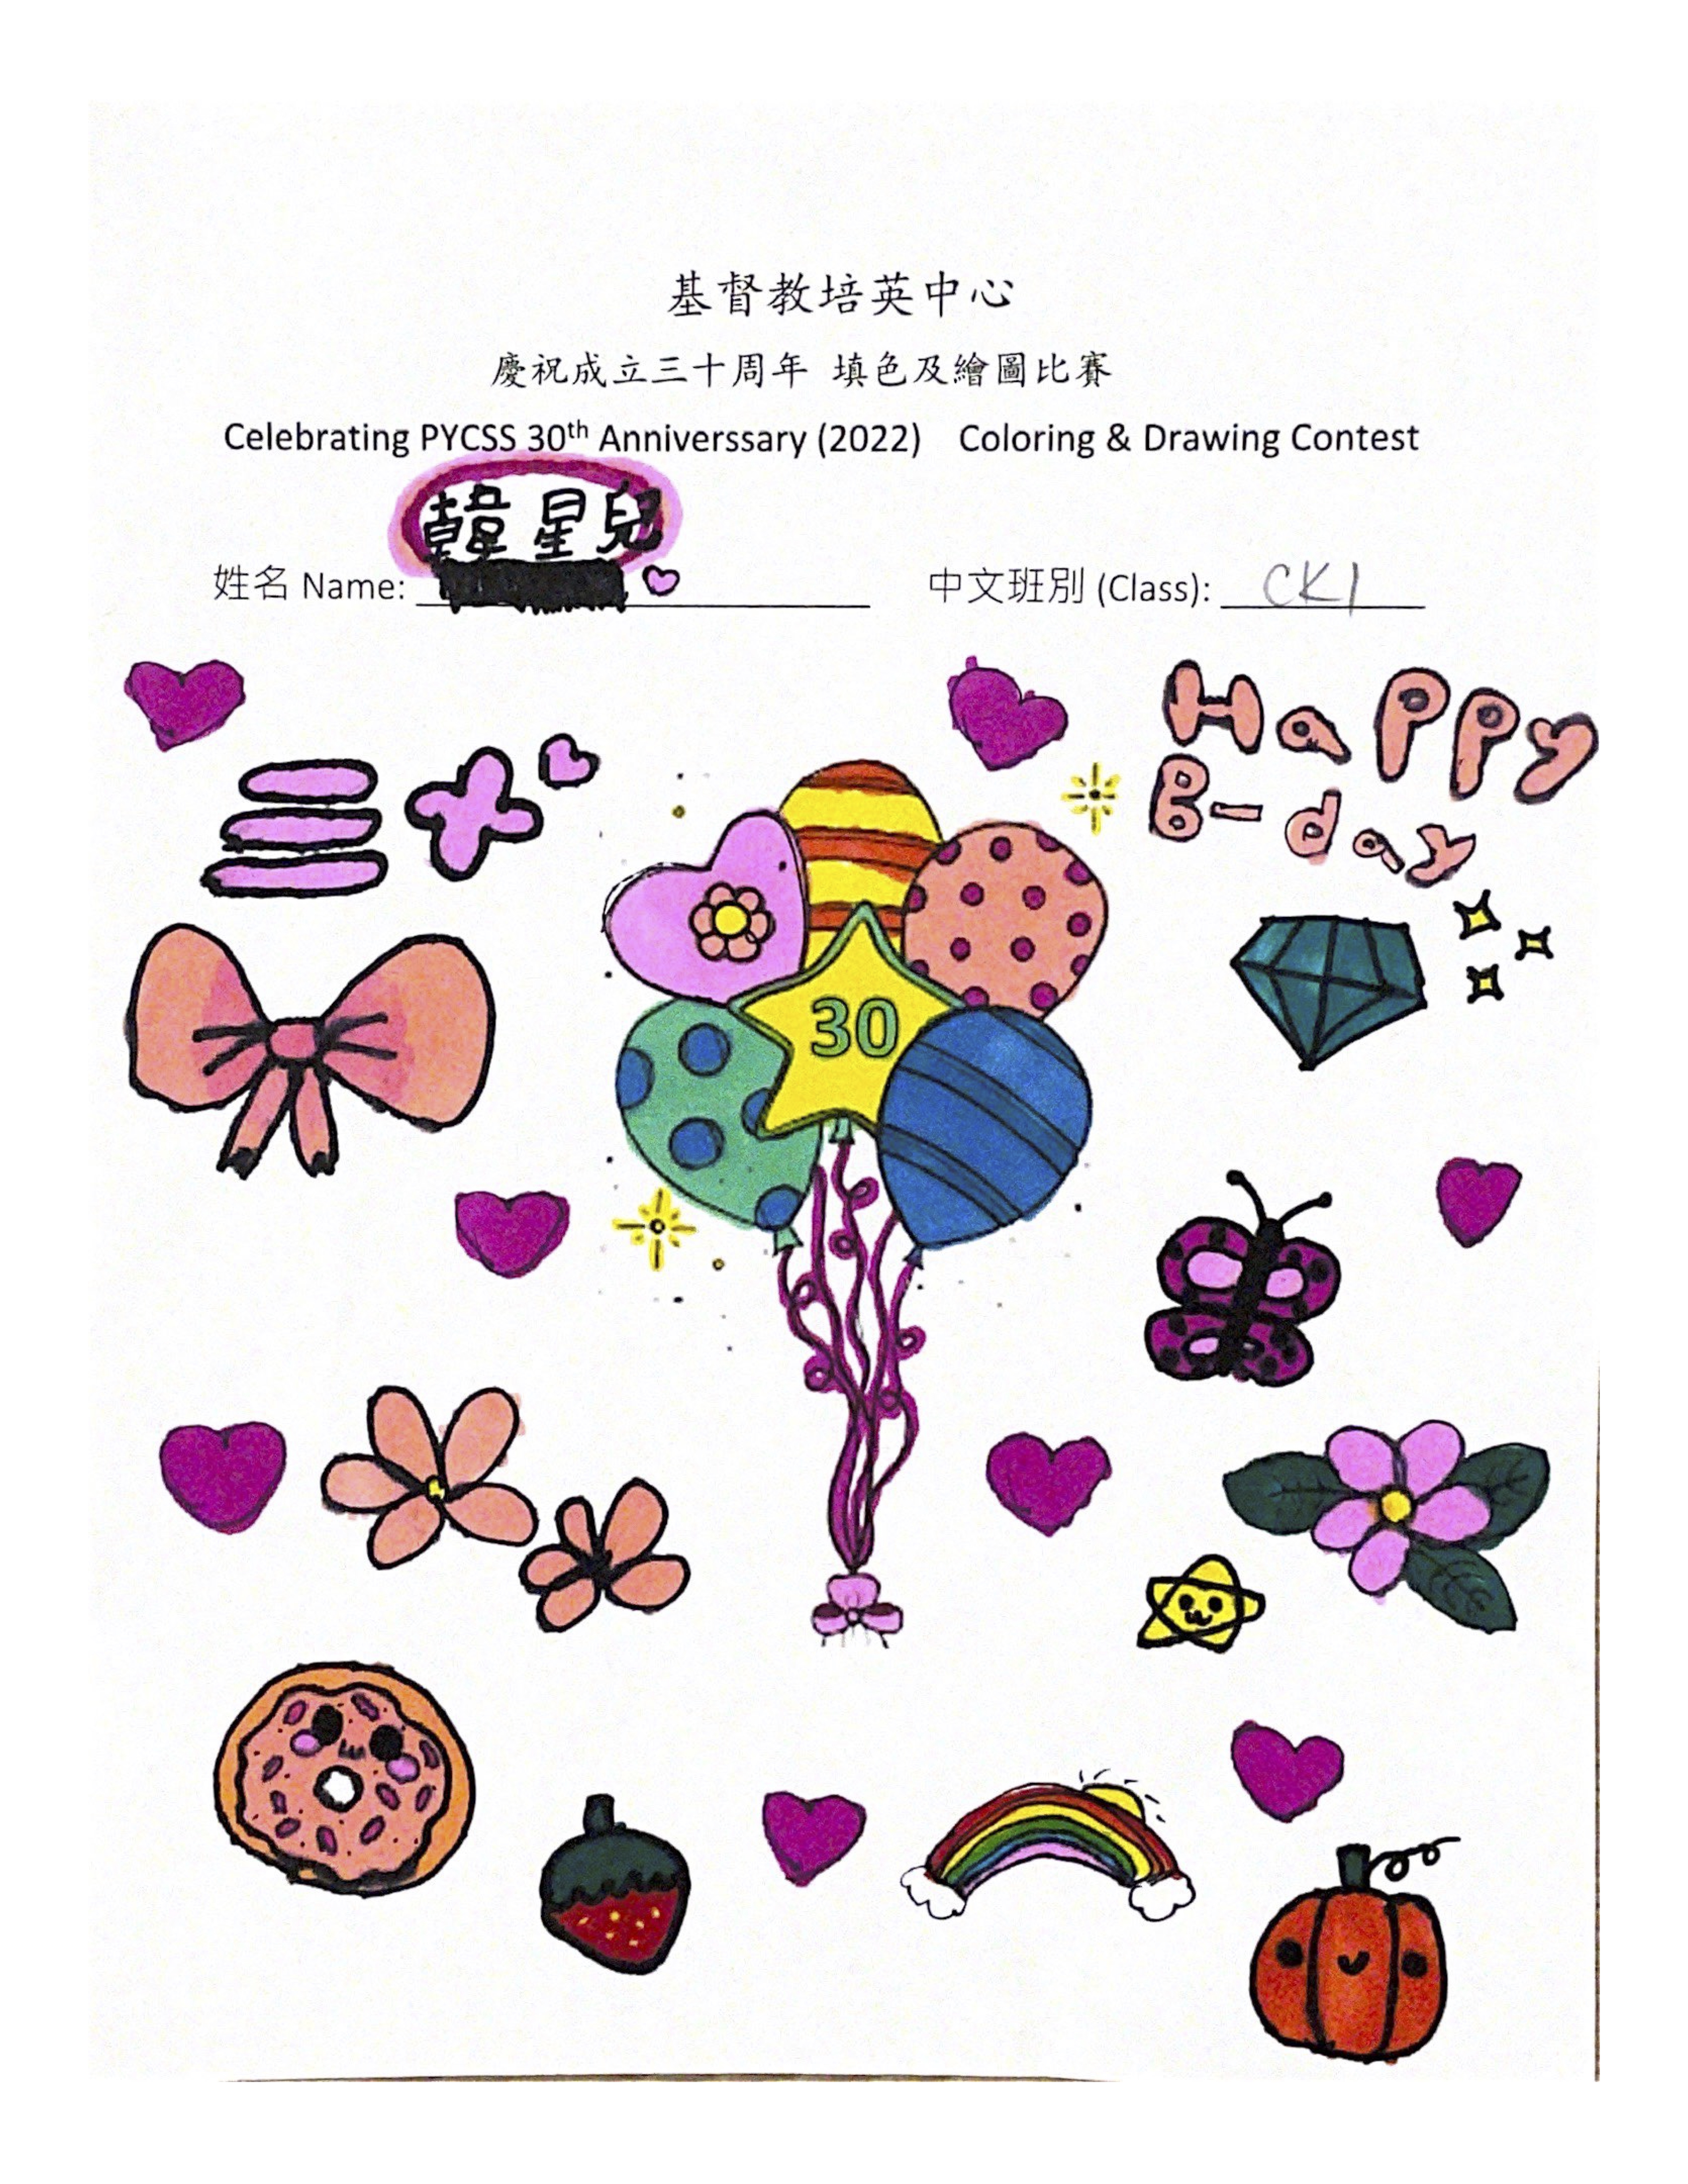 3-Luna Hon CK1 - Coloring Contest